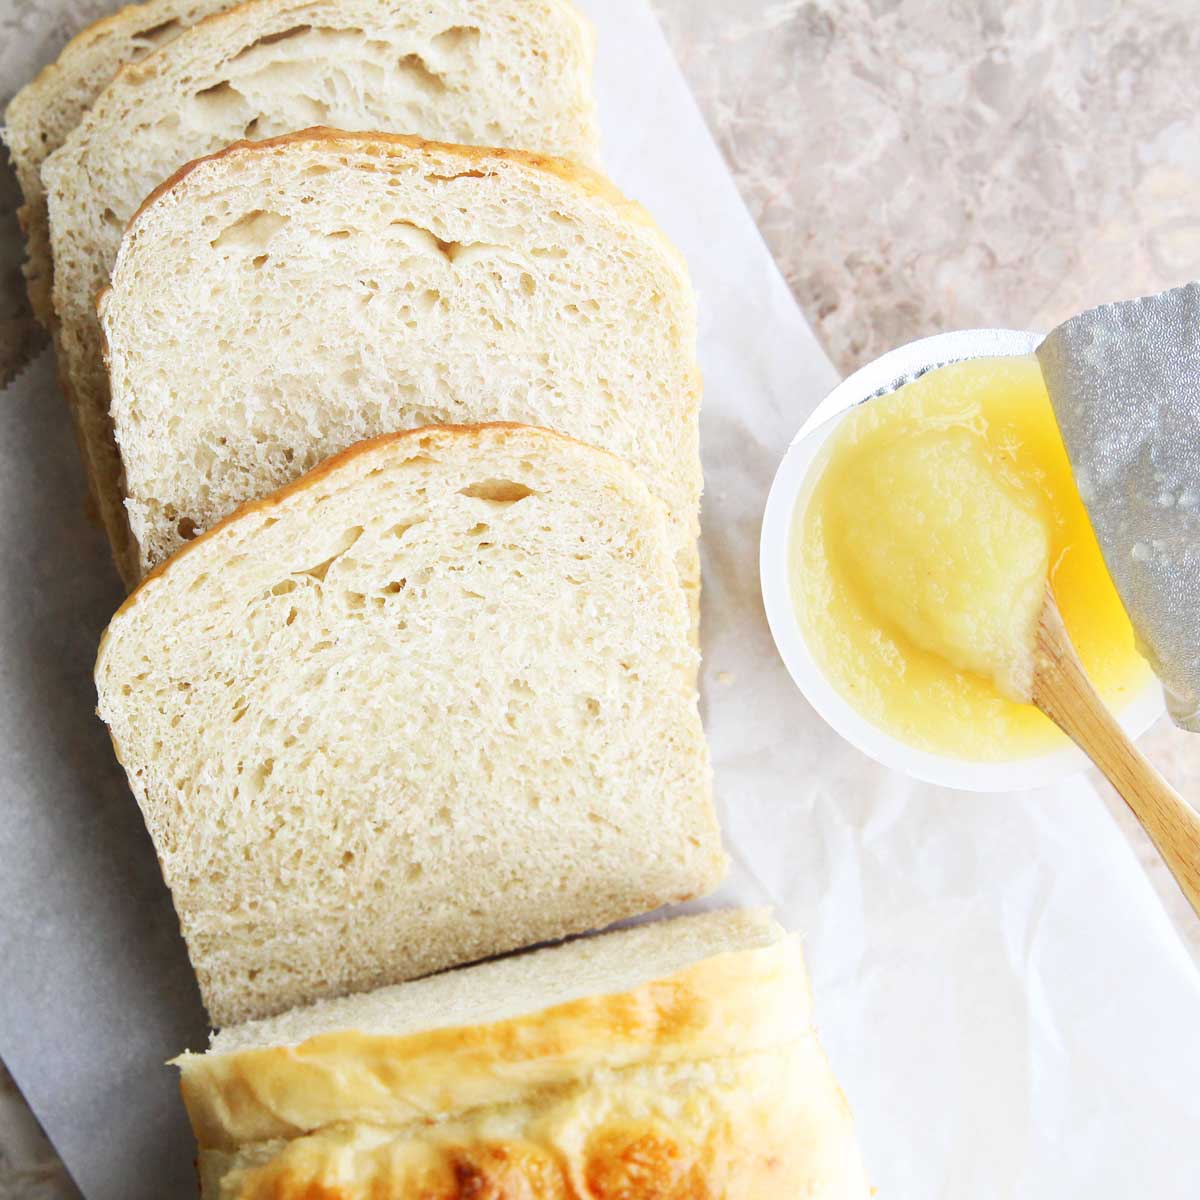 Applesauce Yeast Bread (A Healthier Recipe for White Bread) - Flourless Vanilla Swiss Roll Cake